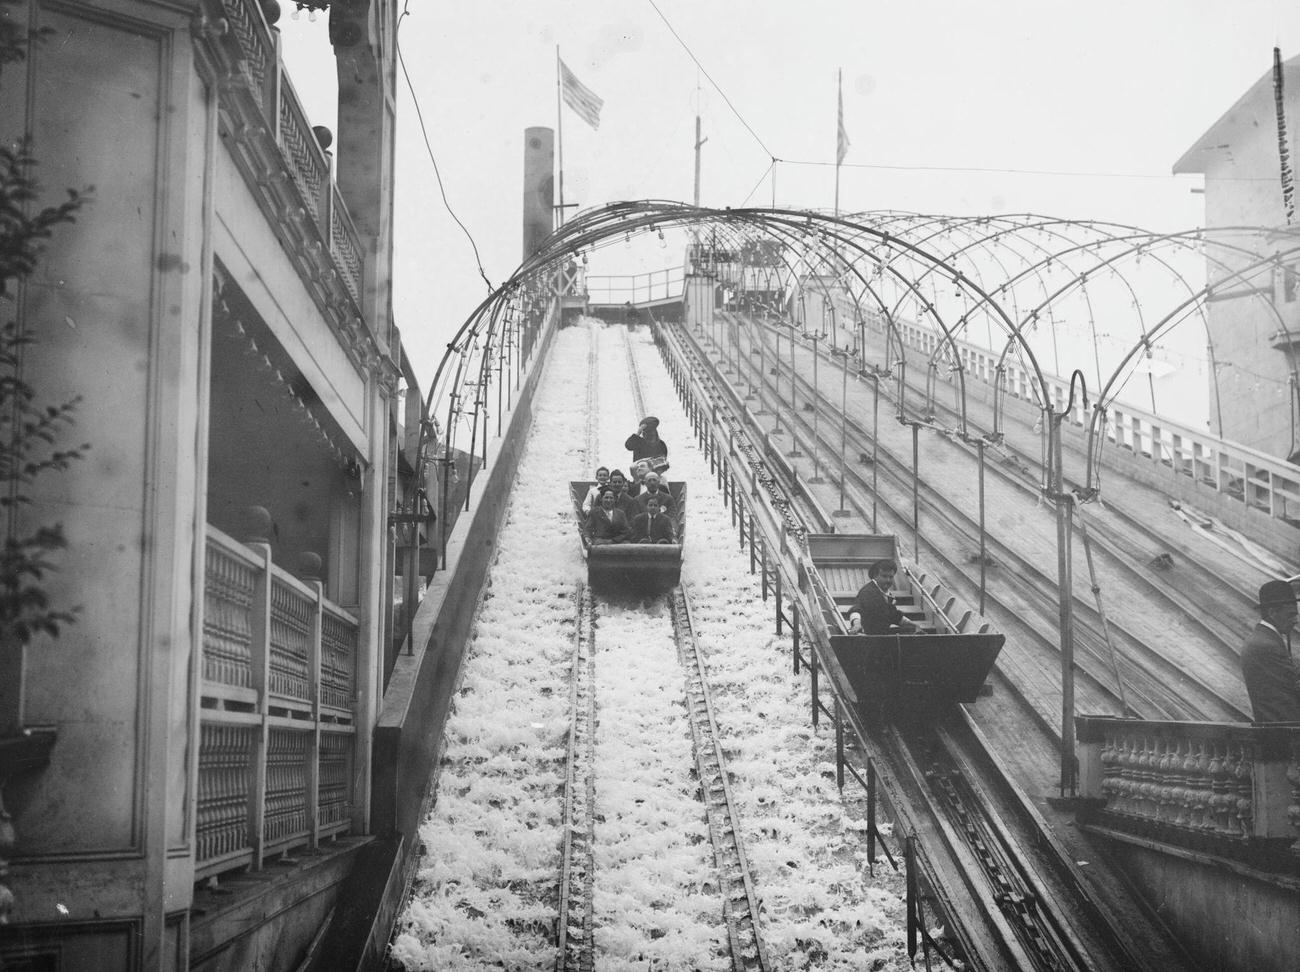 Waterslide Enthusiast At Coney Island Amusement Park, Circa 1900